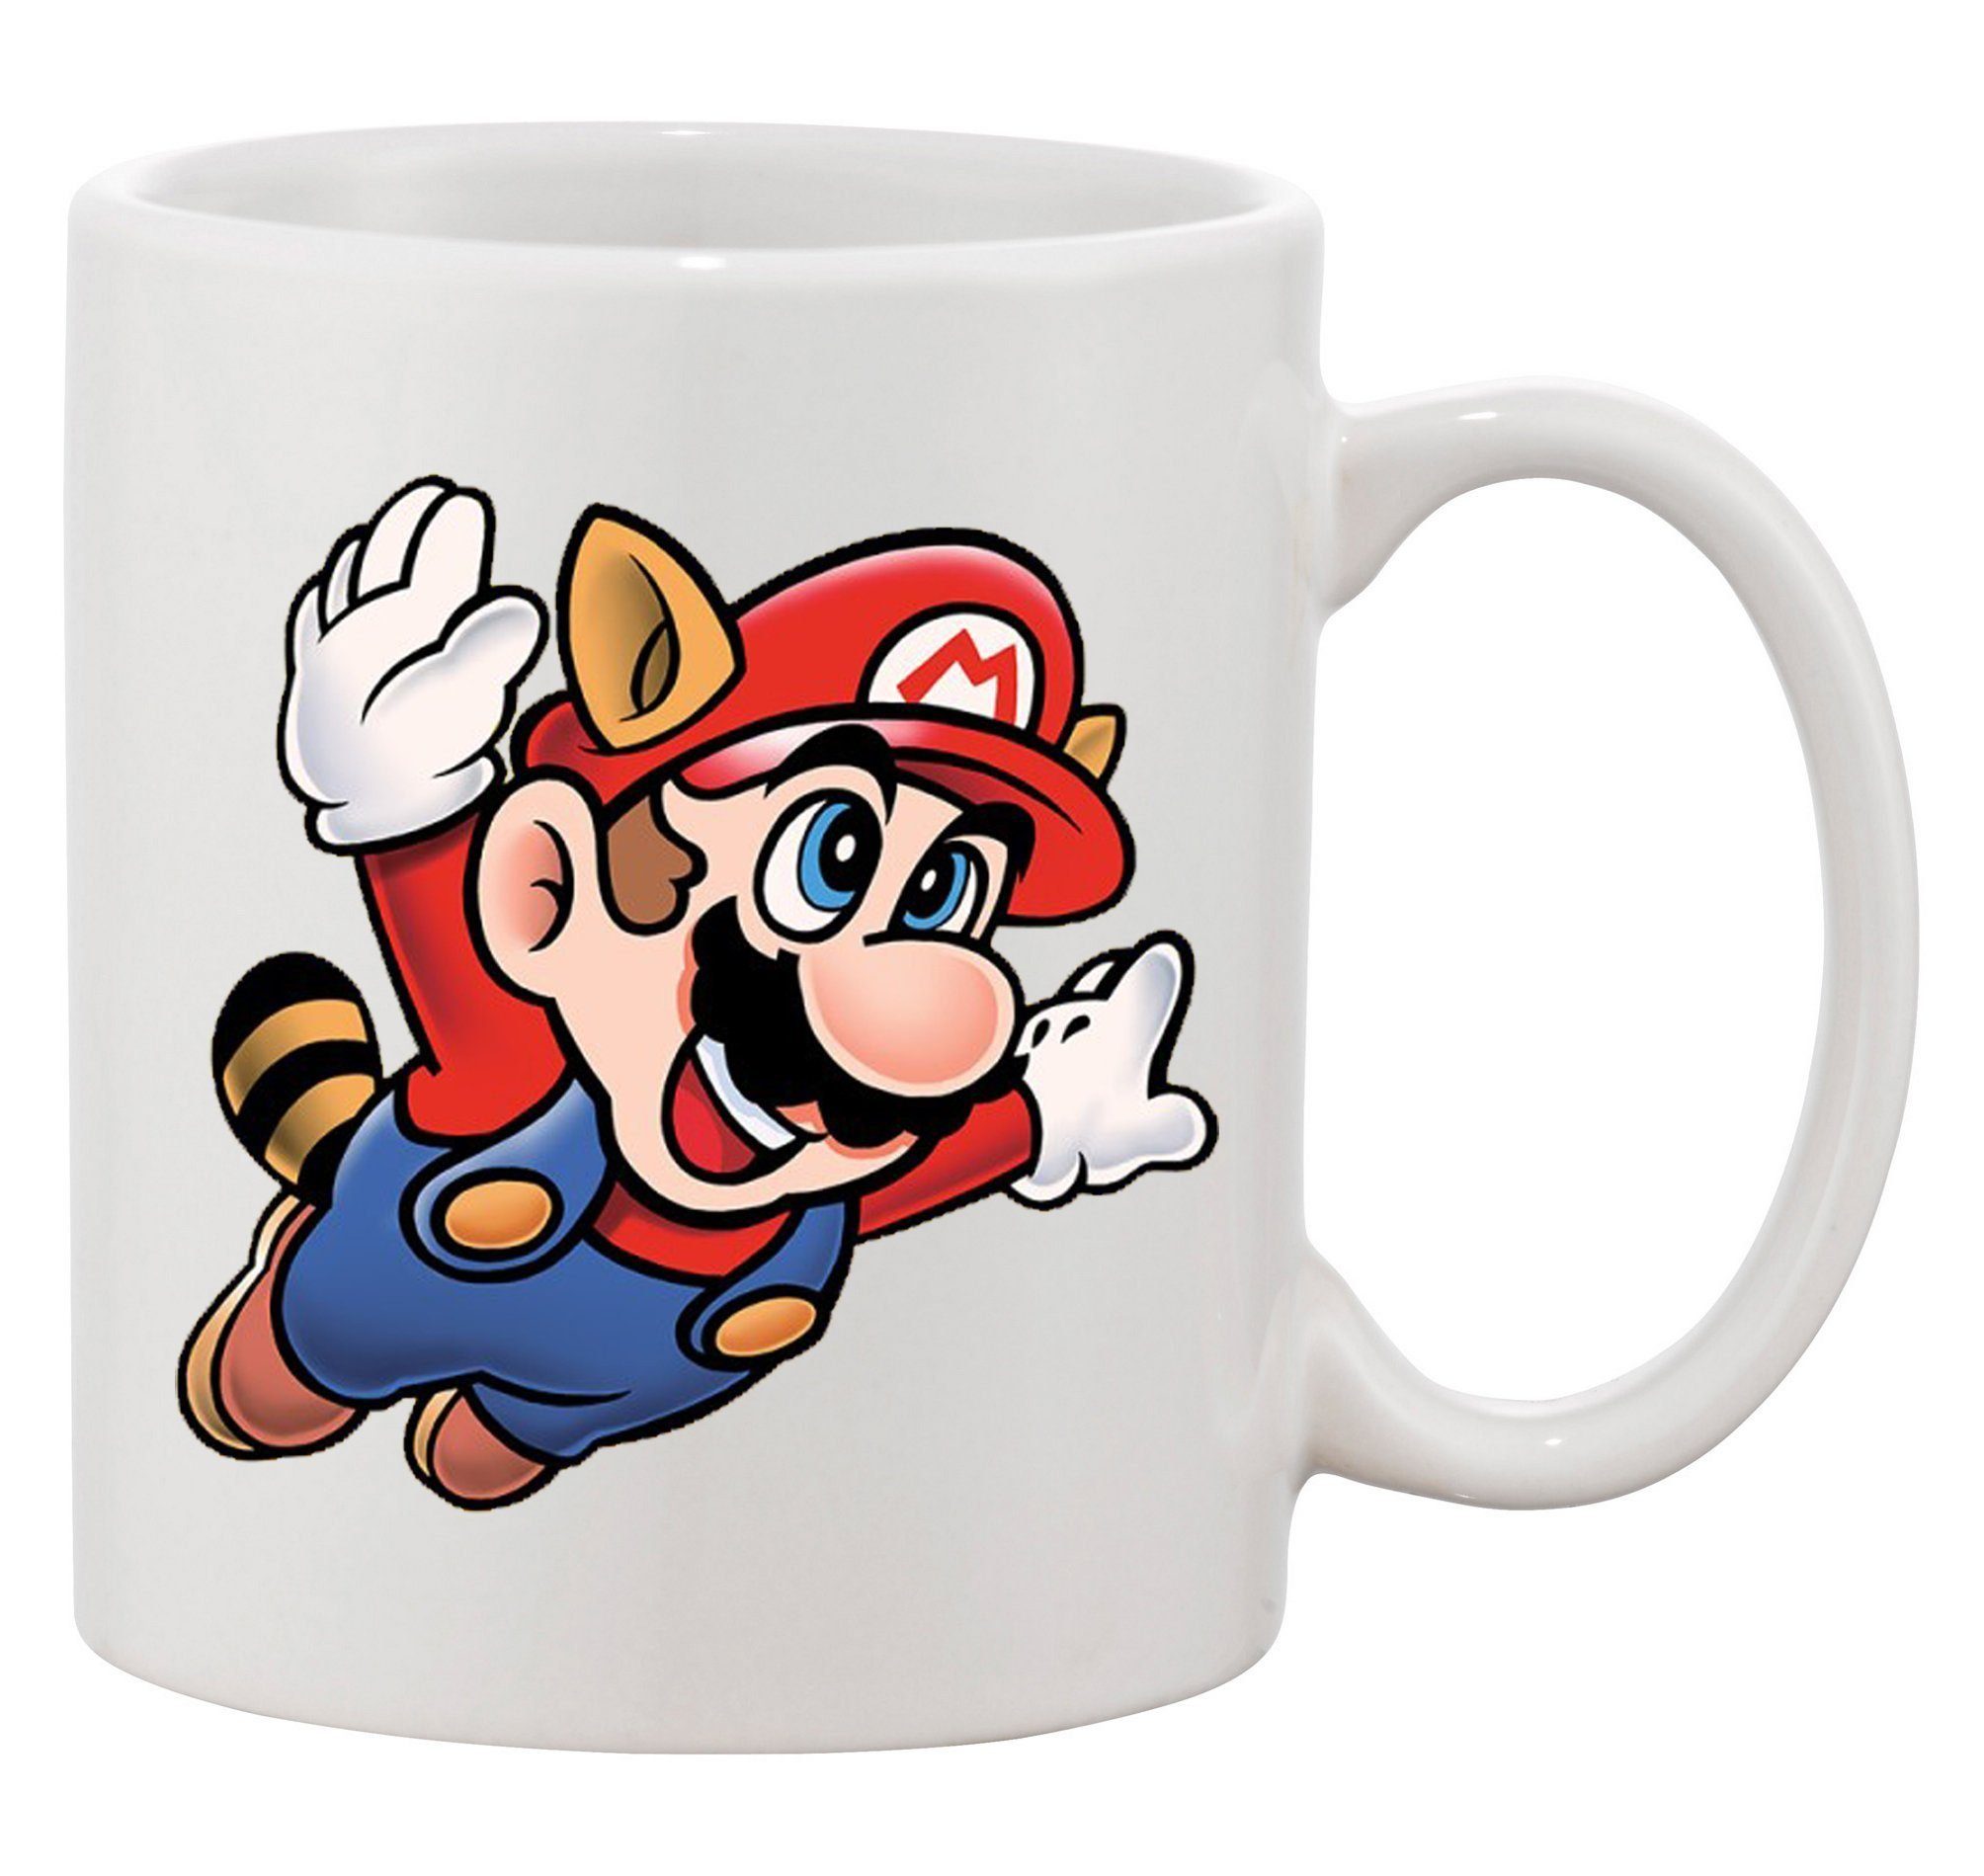 Blondie & Brownie Tasse Super Mario 3 Fligh Nintendo Gamer Gaming Nerd Konsole, Keramik Weiss XXL (600ml)